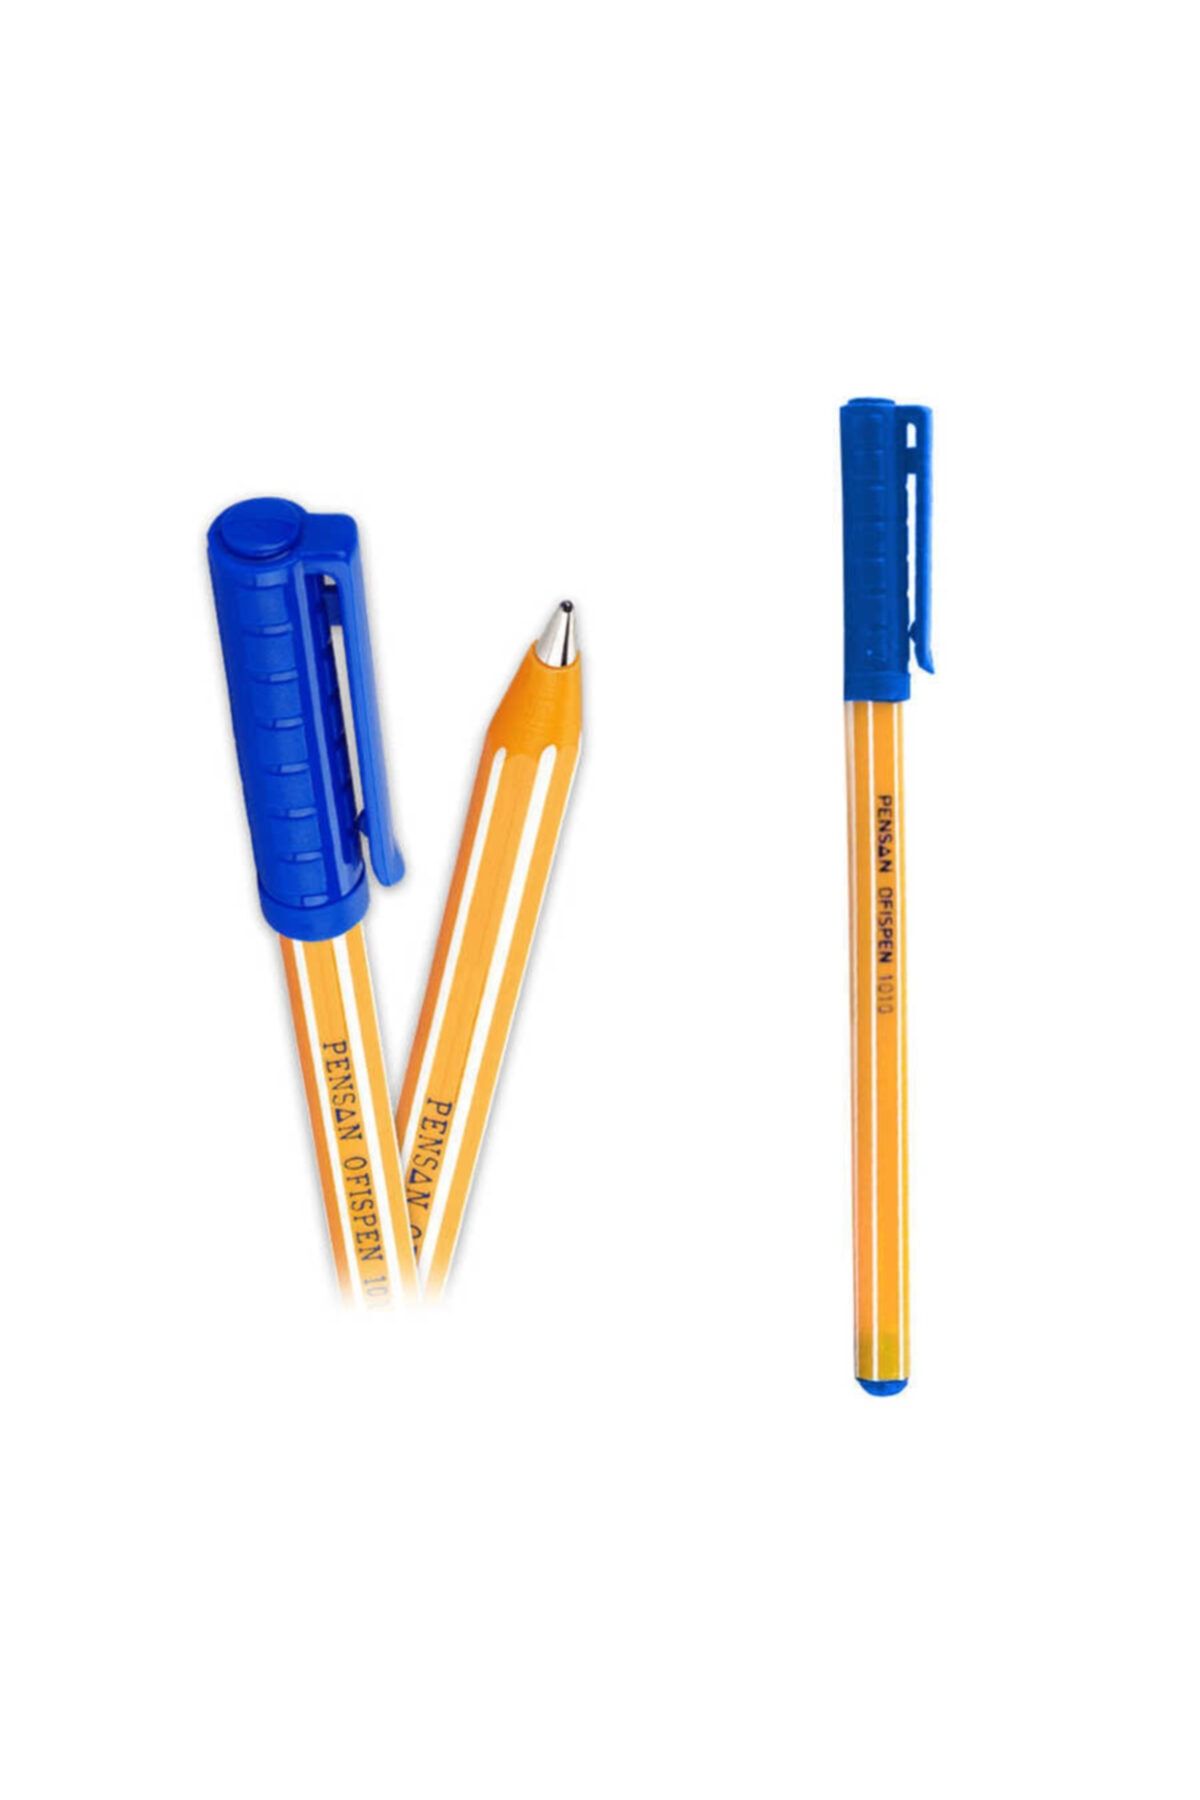 Pensan 1010 Mavi Offıce-pen Tükenmez Kalem 1 Adet